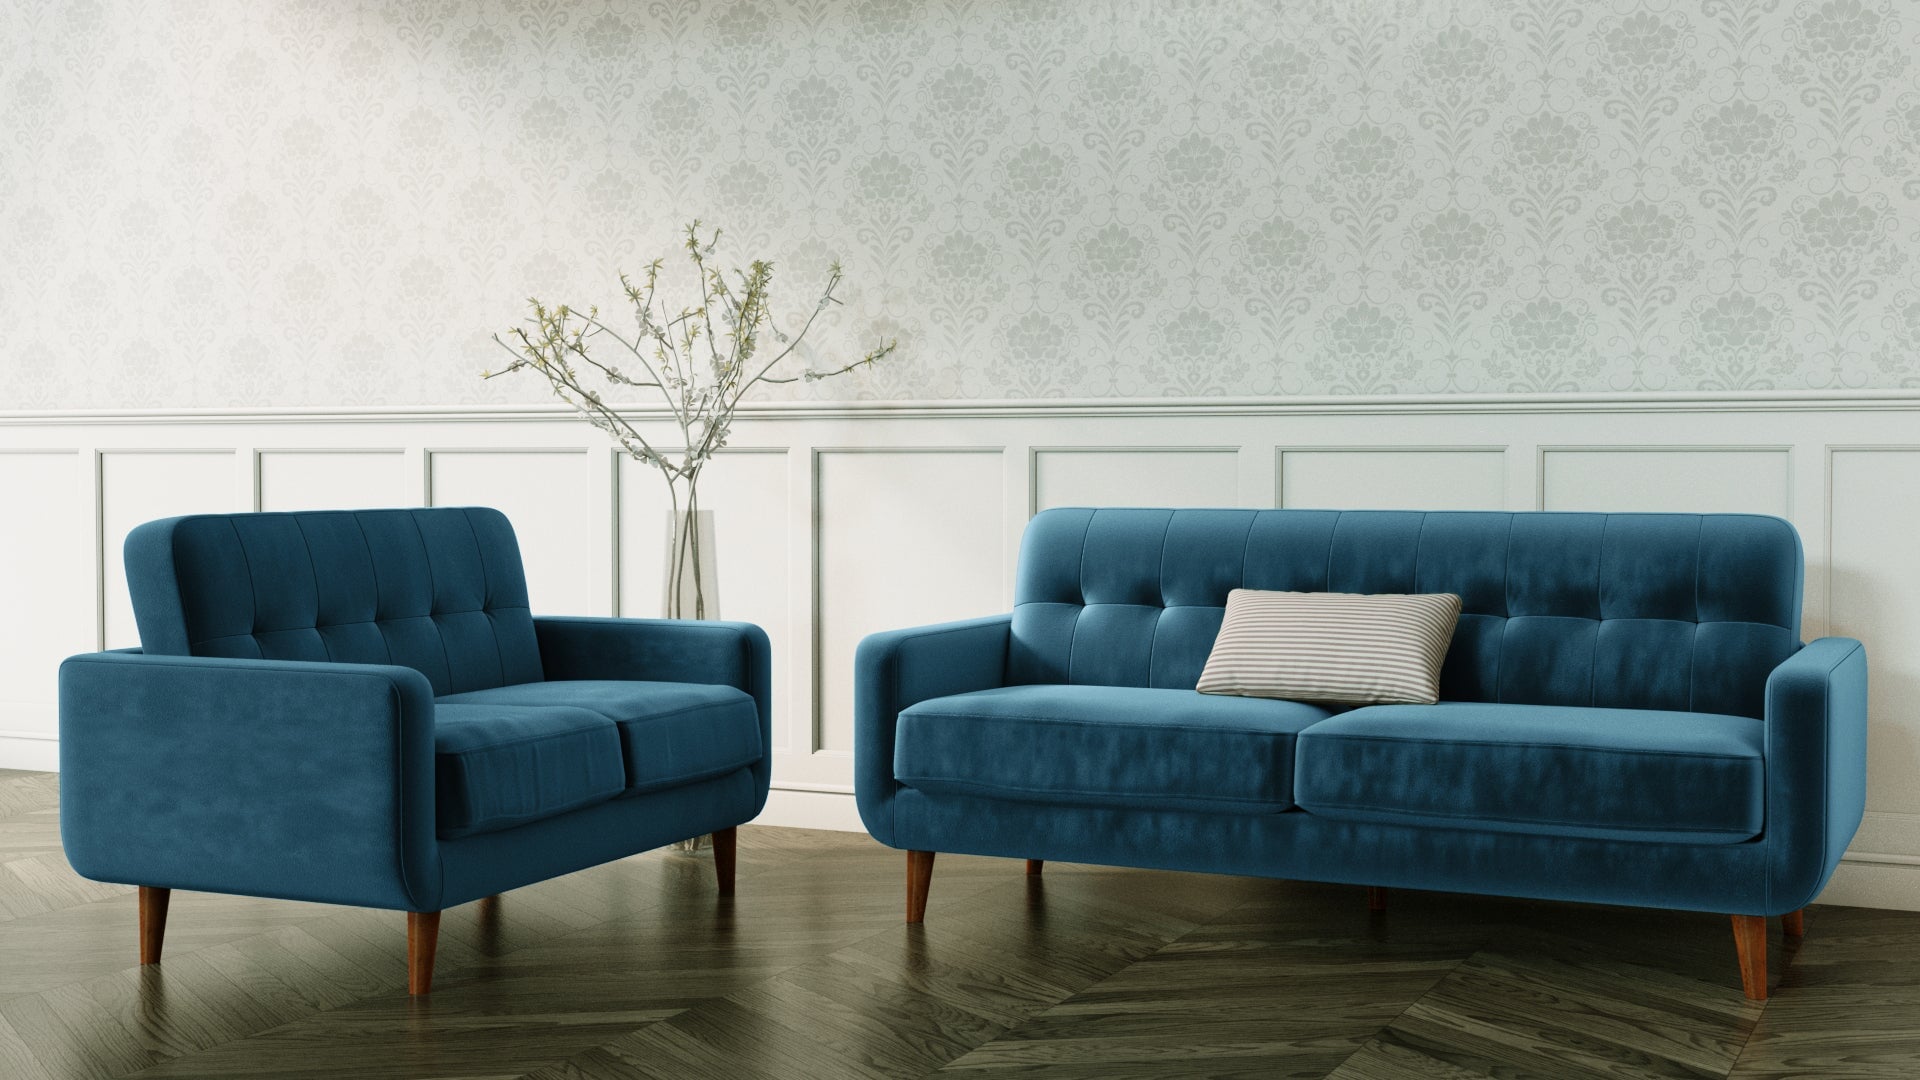 Dexter 3 & 2 Seater Sofa Package Deal | Teal Blue Plush Velvet Dining Chair Casa Maria Designs 